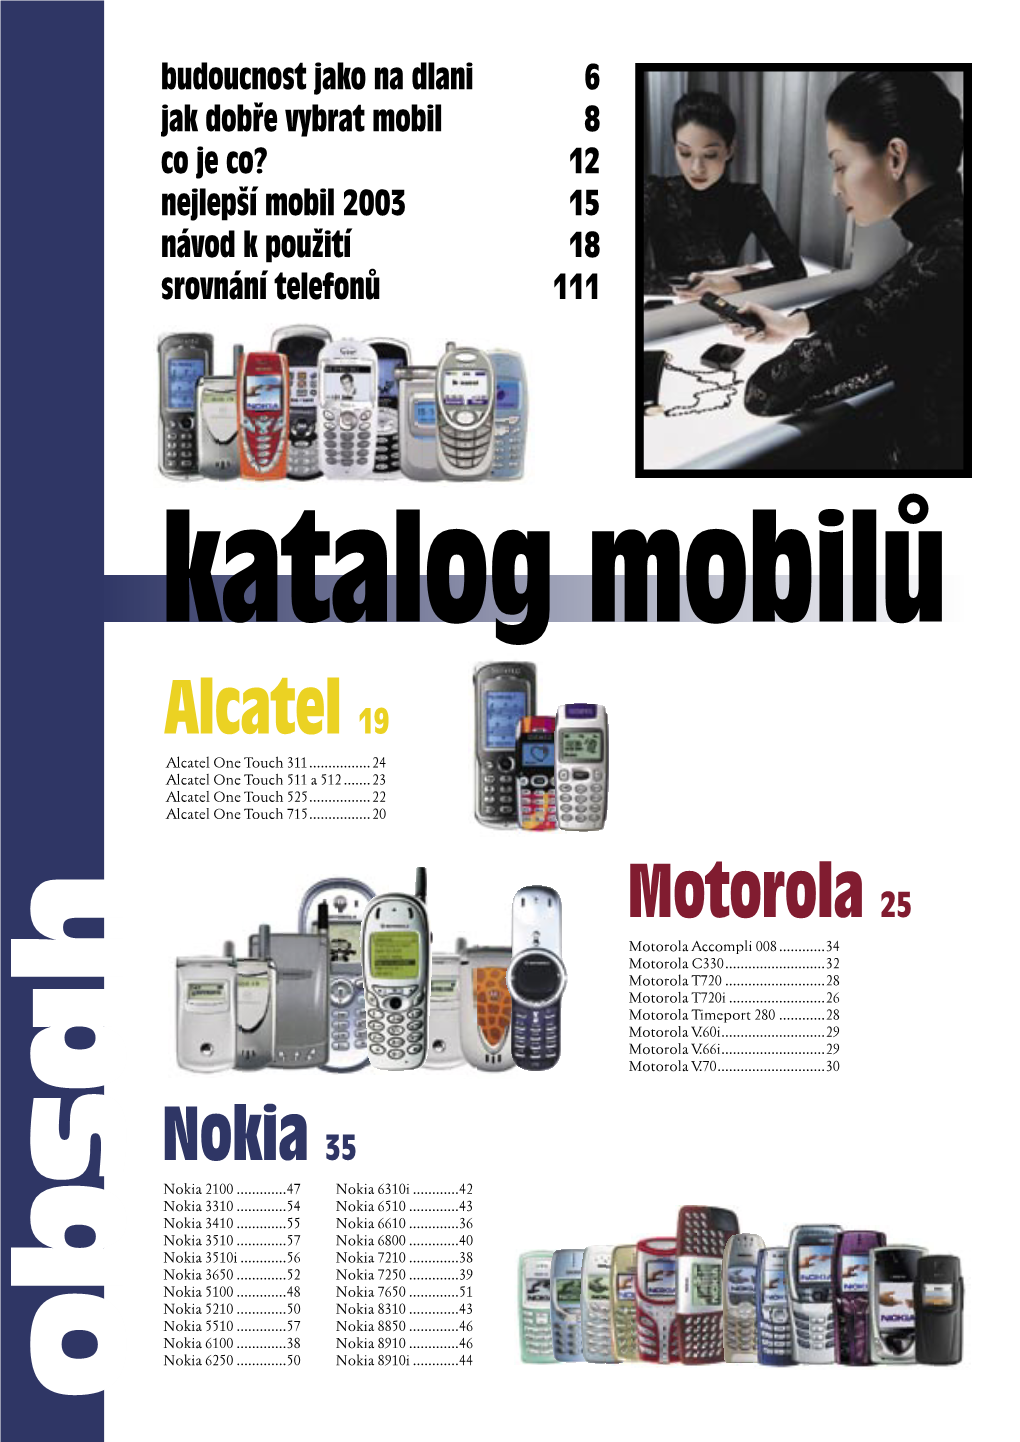 Alcatel 19 Motorola 25 Nokia 35